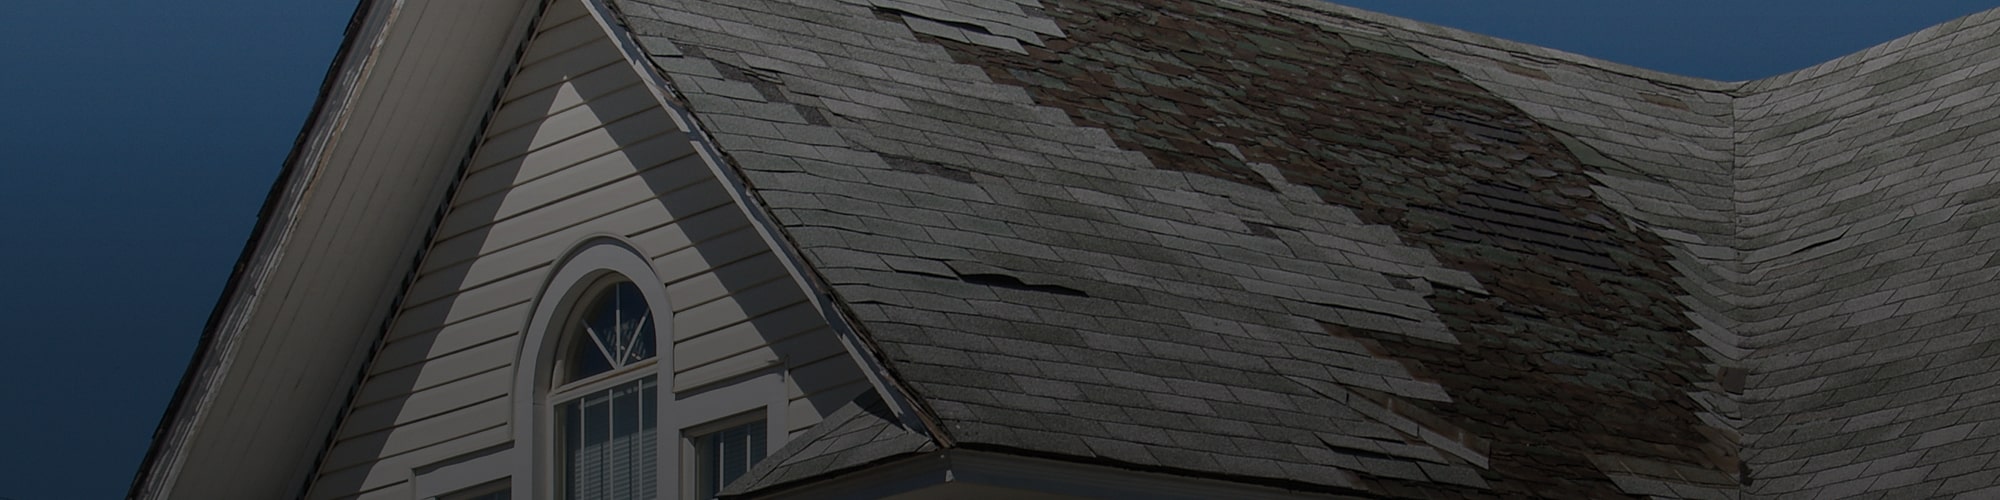 Roof repair companies near Grand Rapids, Rockford, & Cascade